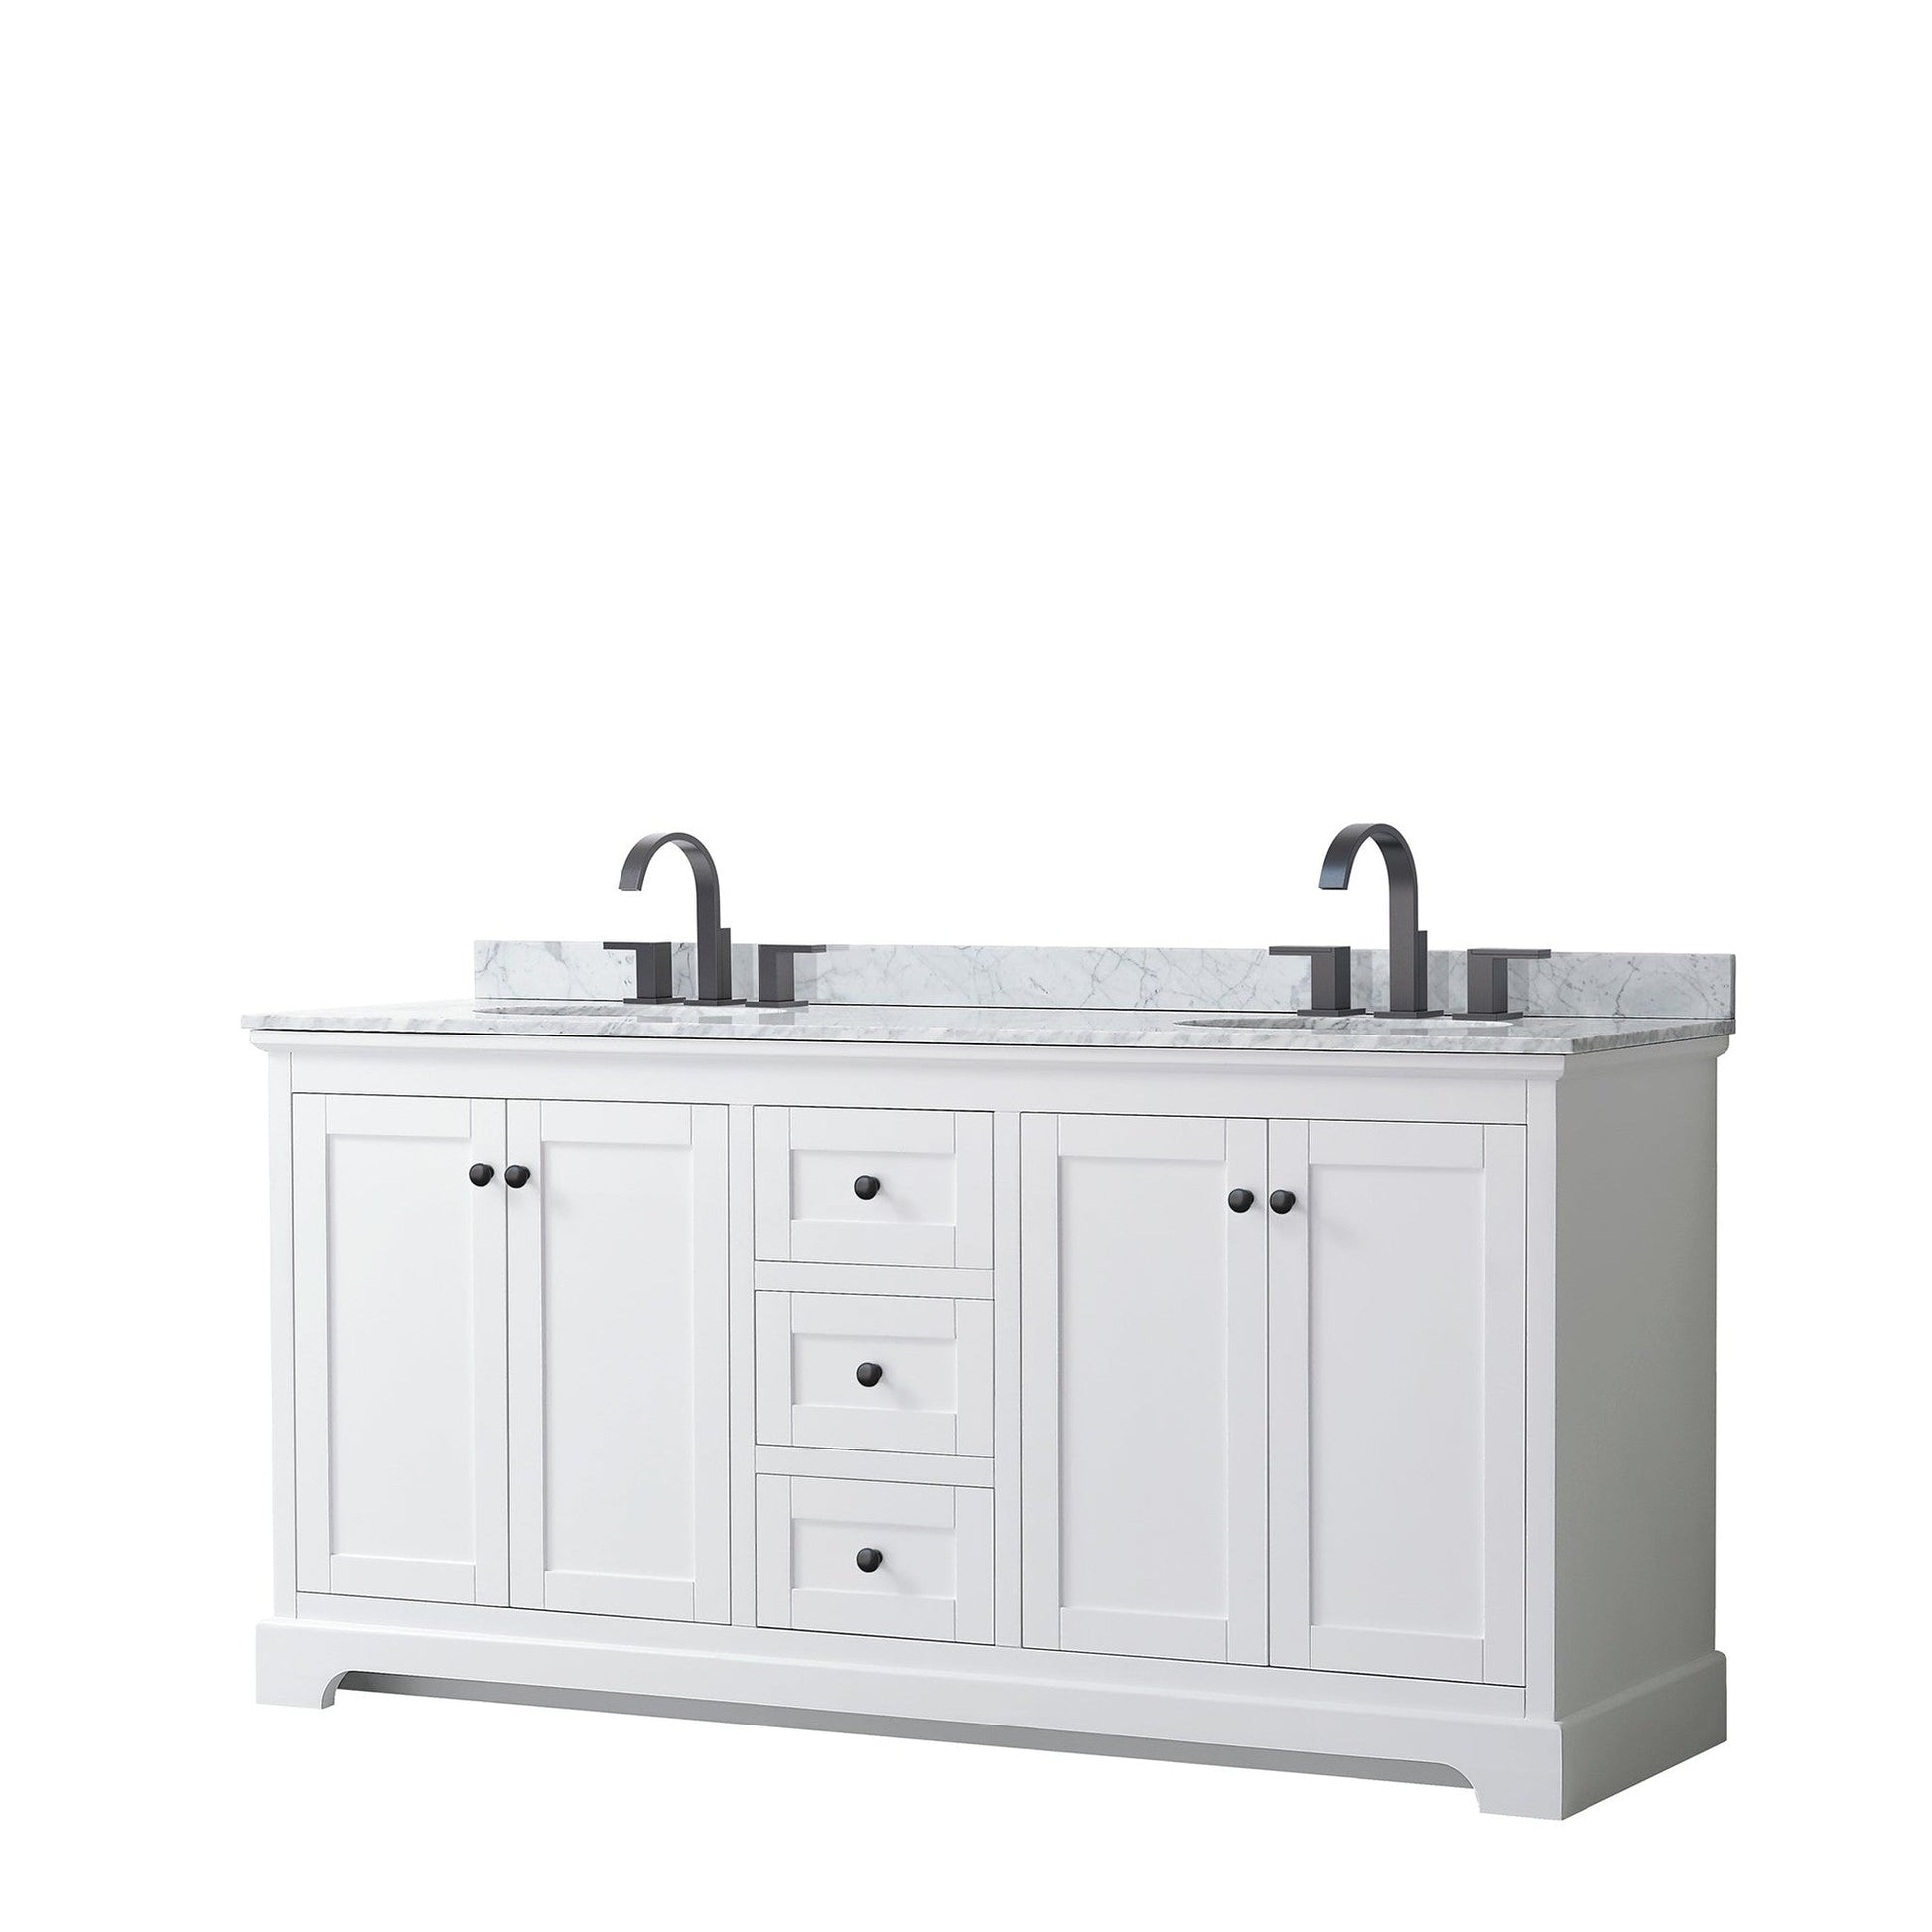 Avery 72" Double Bathroom Vanity in White, White Carrara Marble Countertop, Undermount Oval Sinks, Matte Black Trim